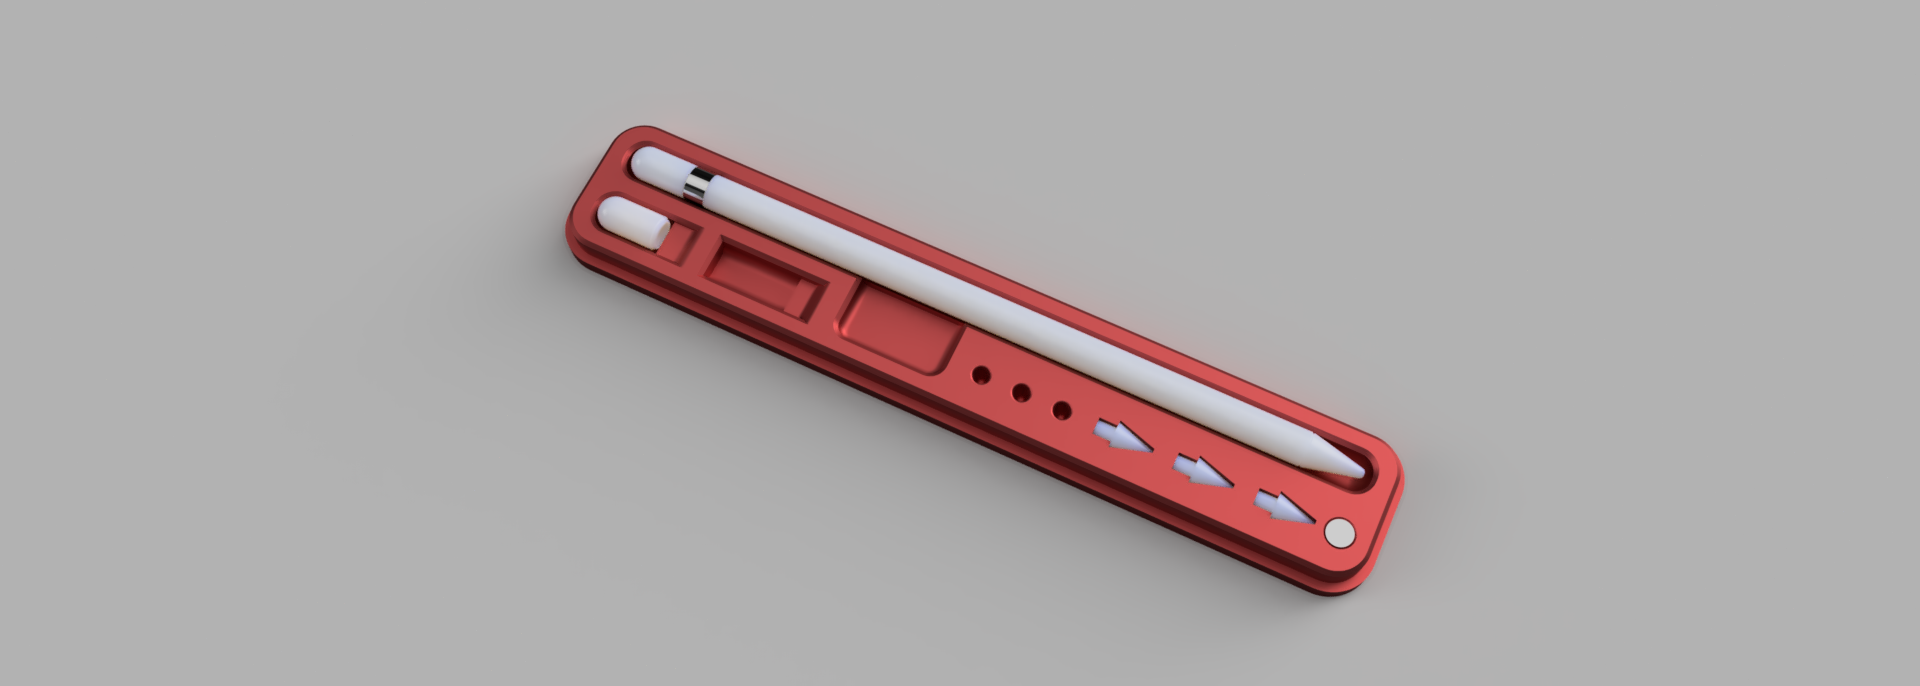 Apple pencil 1 case by Ujang Karnadi | Download free STL model ...